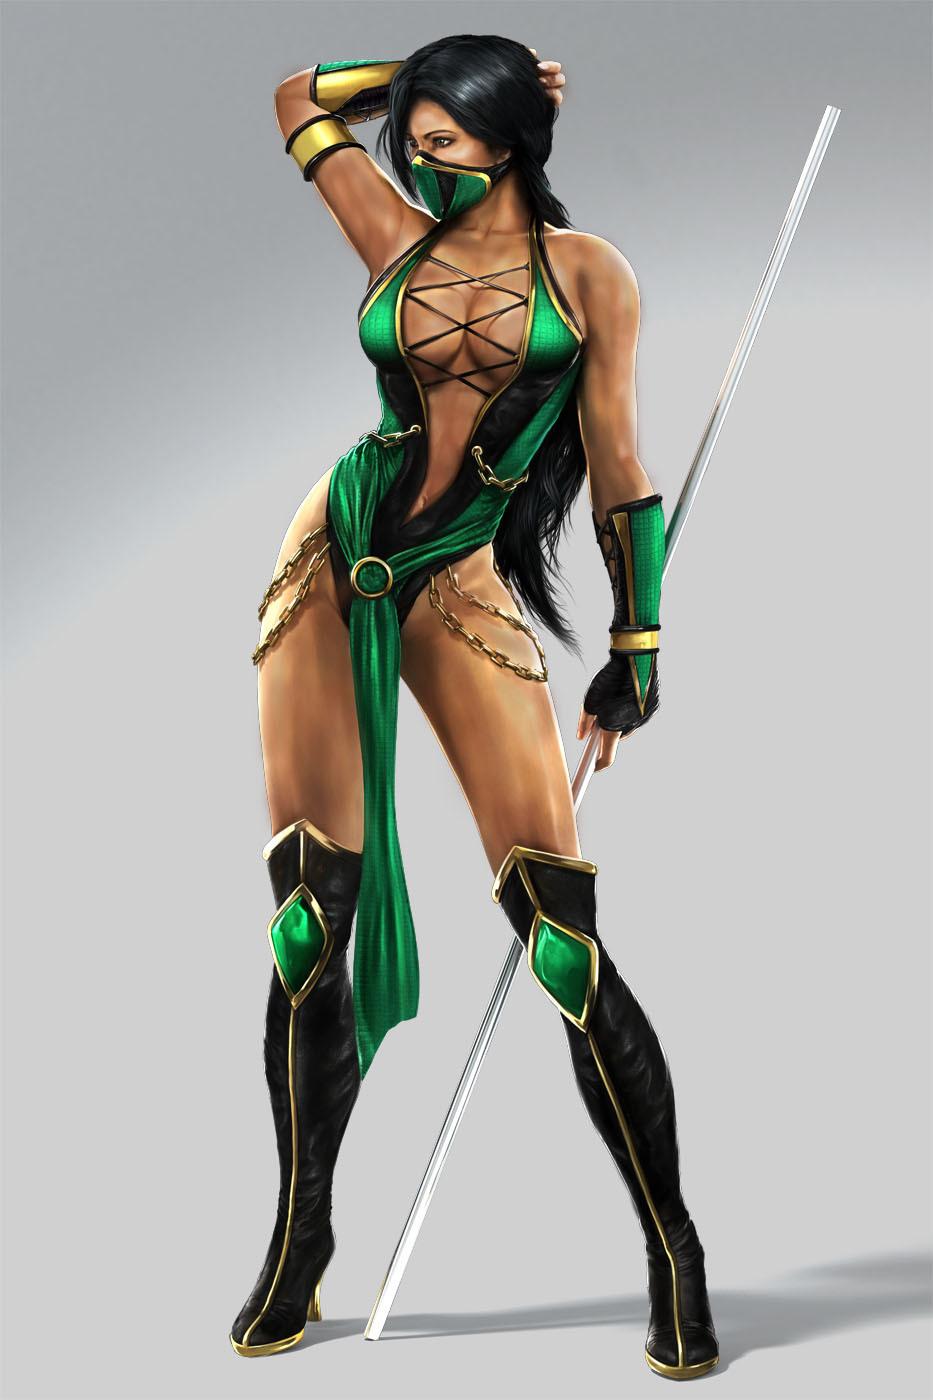 Jade from Mortal Kombat 9 Kombat Photo